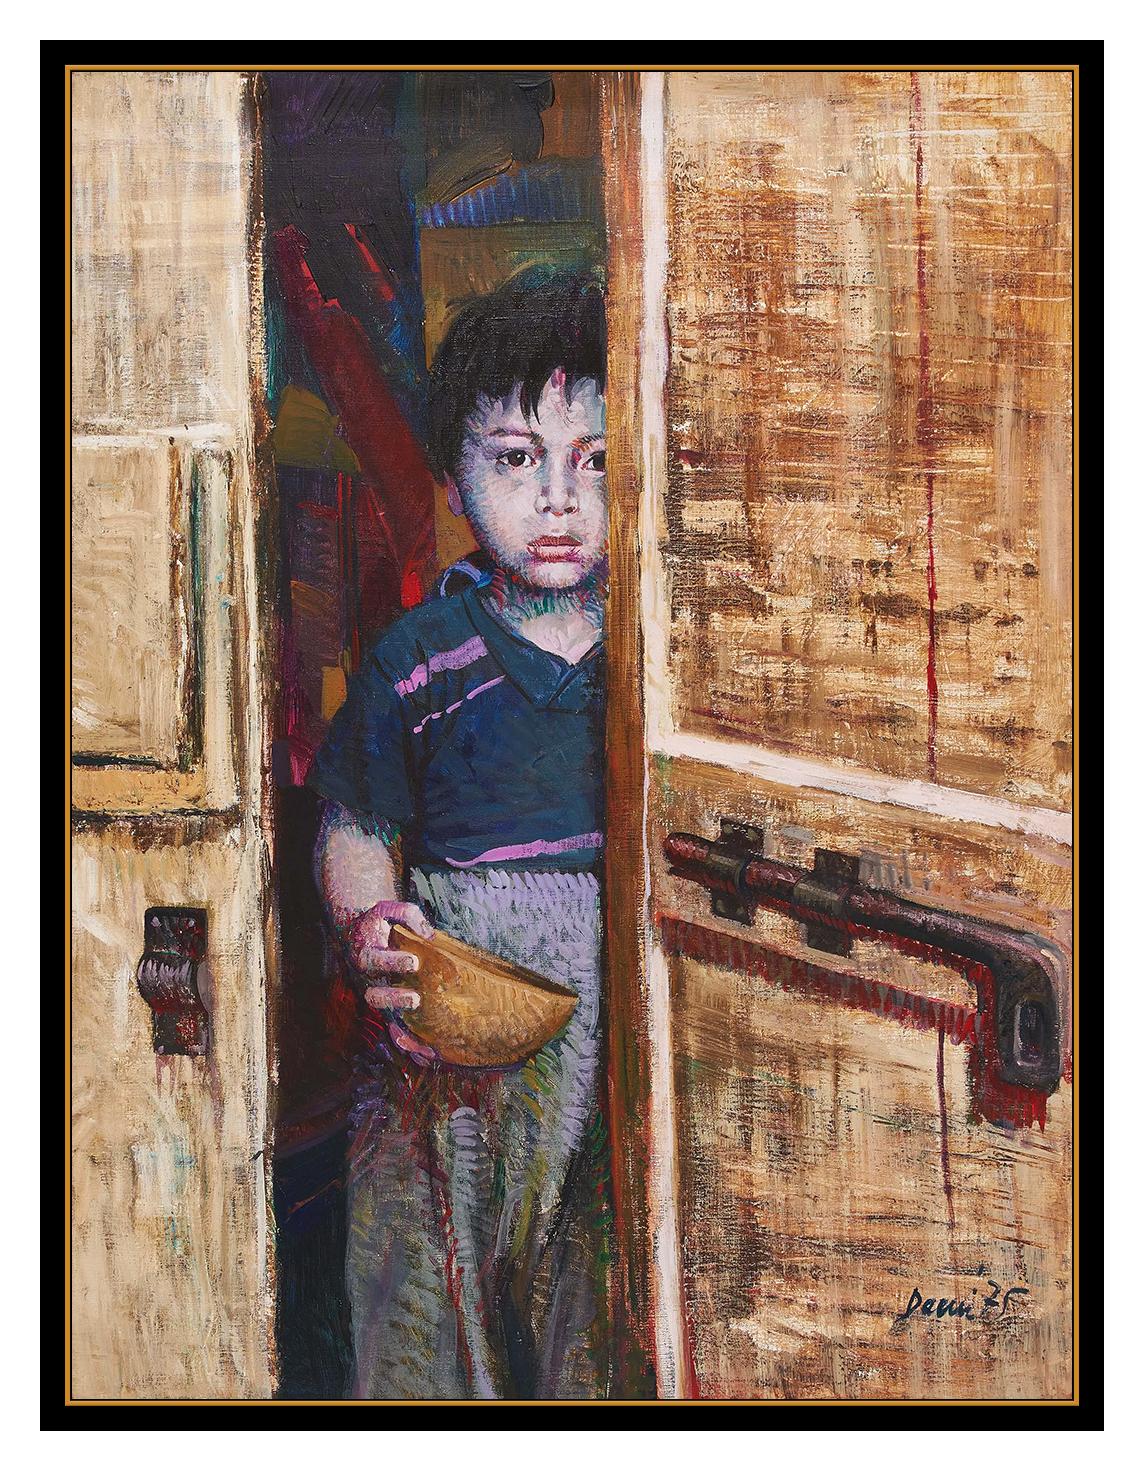 Pino Daeni Large Original Oil Painting on Canvas Child Portrait Signed Artwork 2